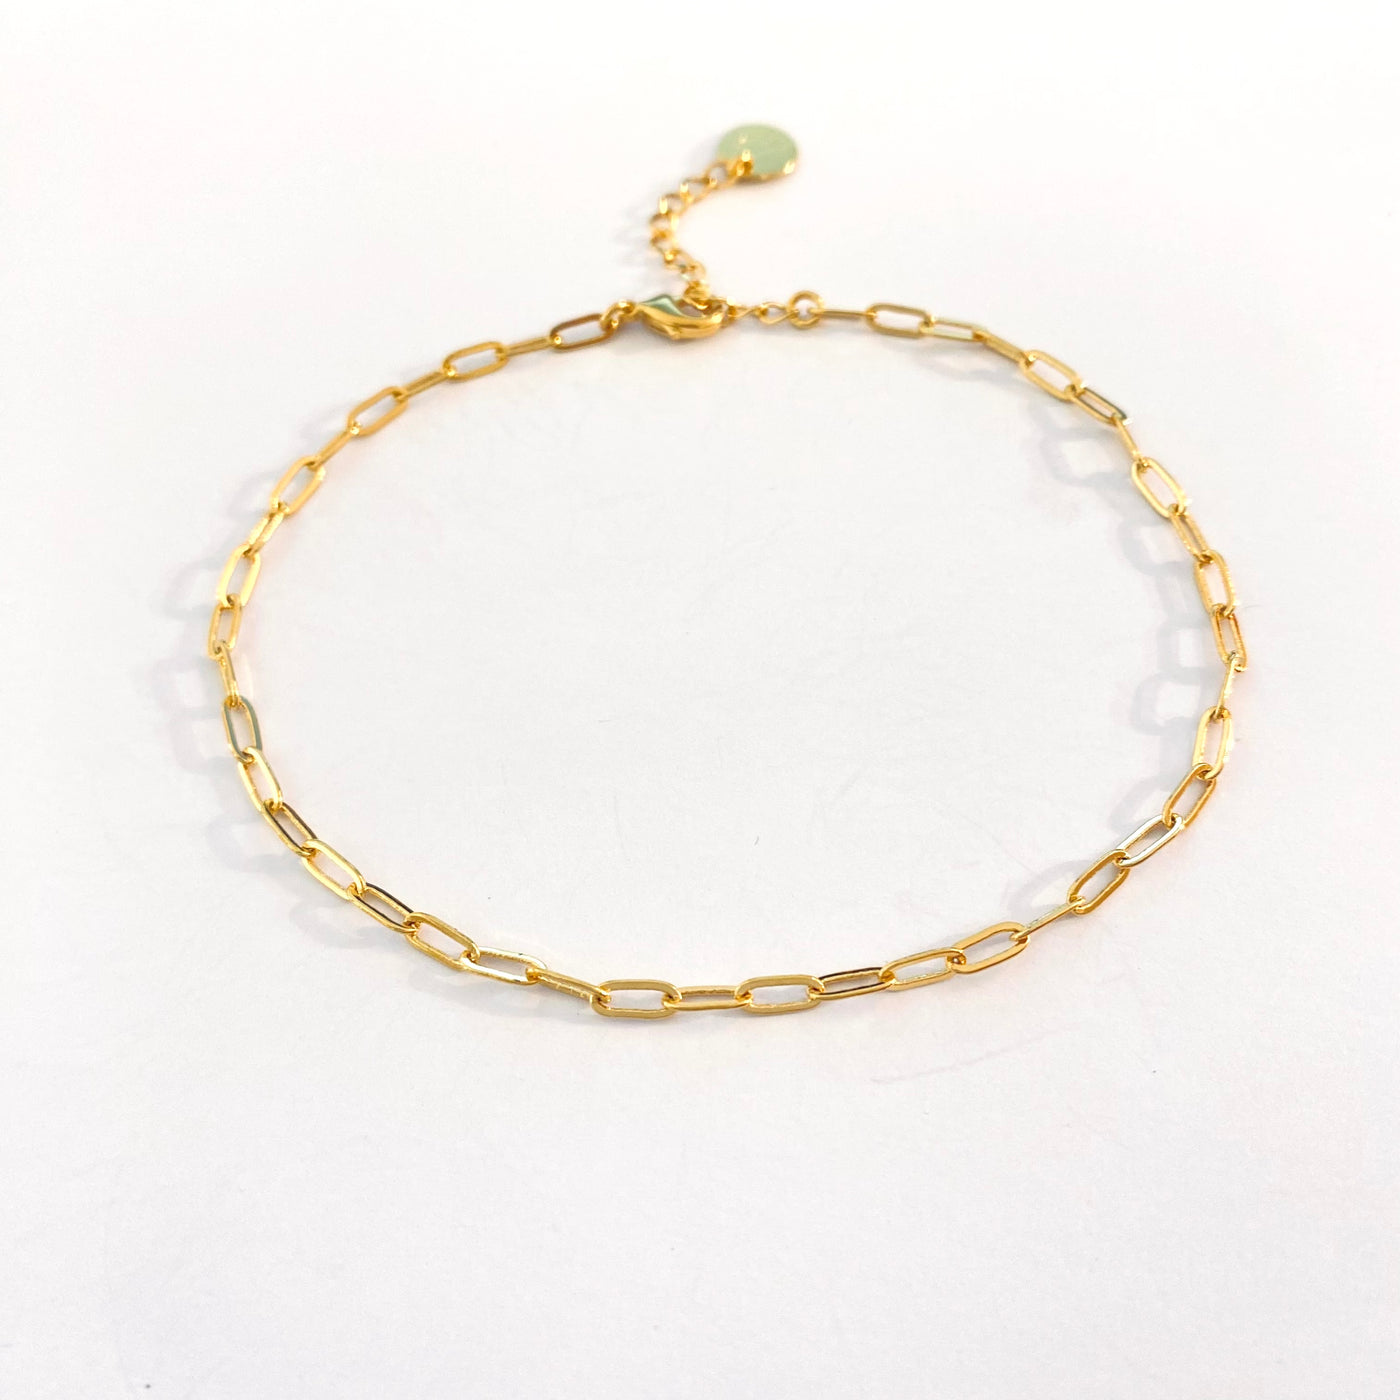 WINE - Gold plated ankle bracelet